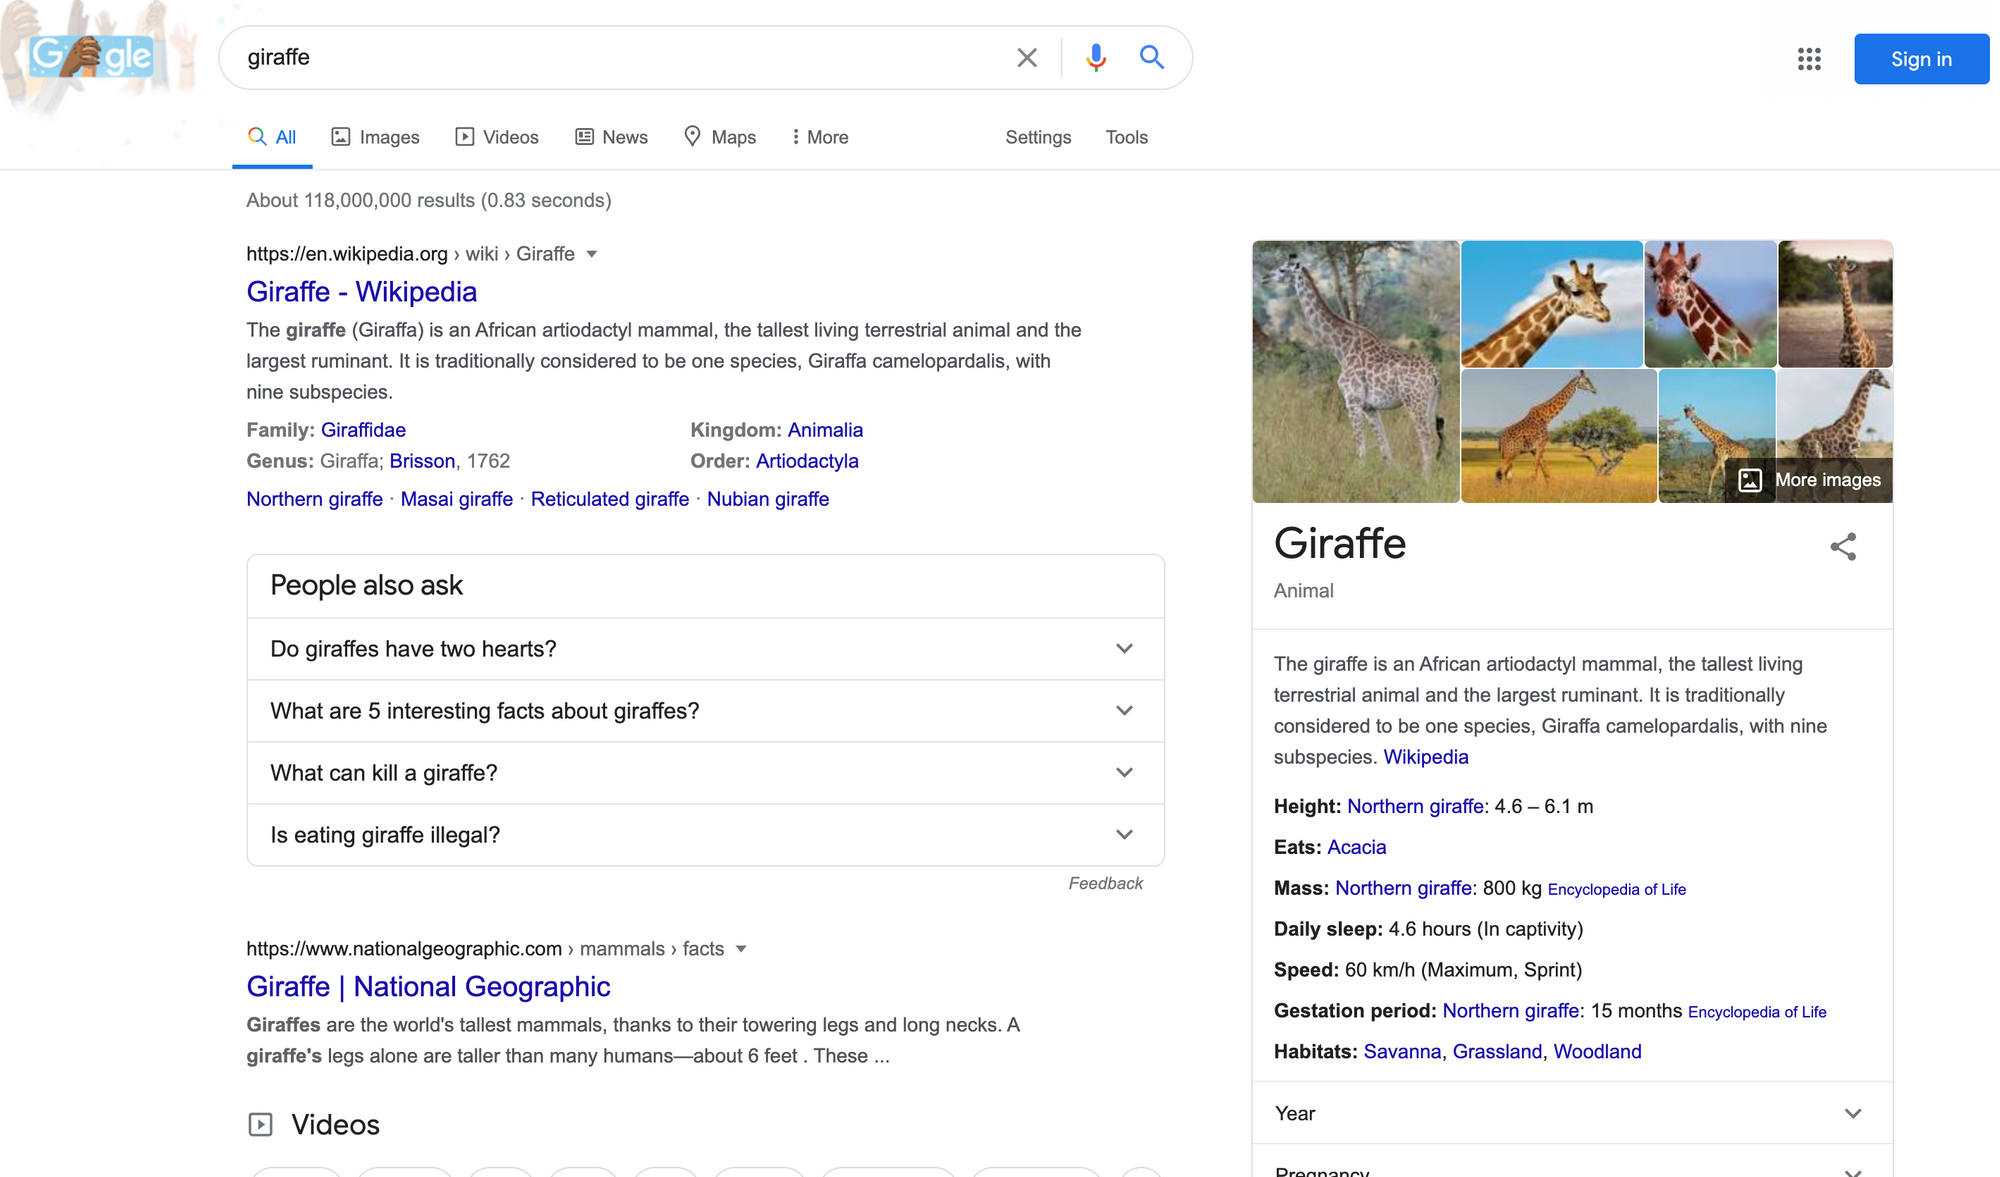 [Giraffe] - Google Search